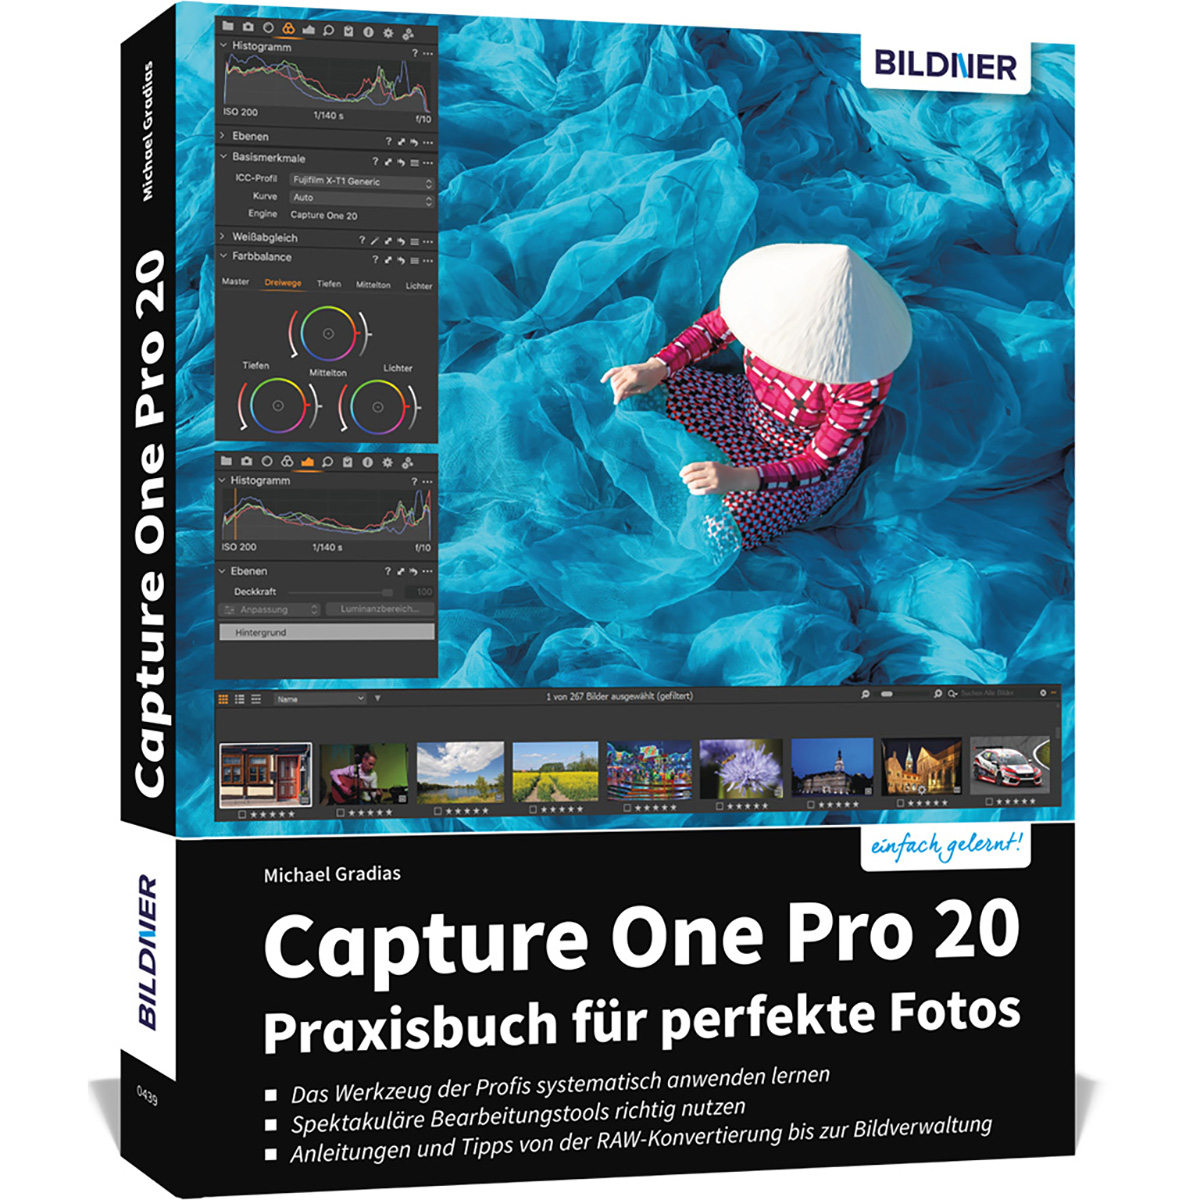 Capture One Pro Praxishandbuch - 20 Das